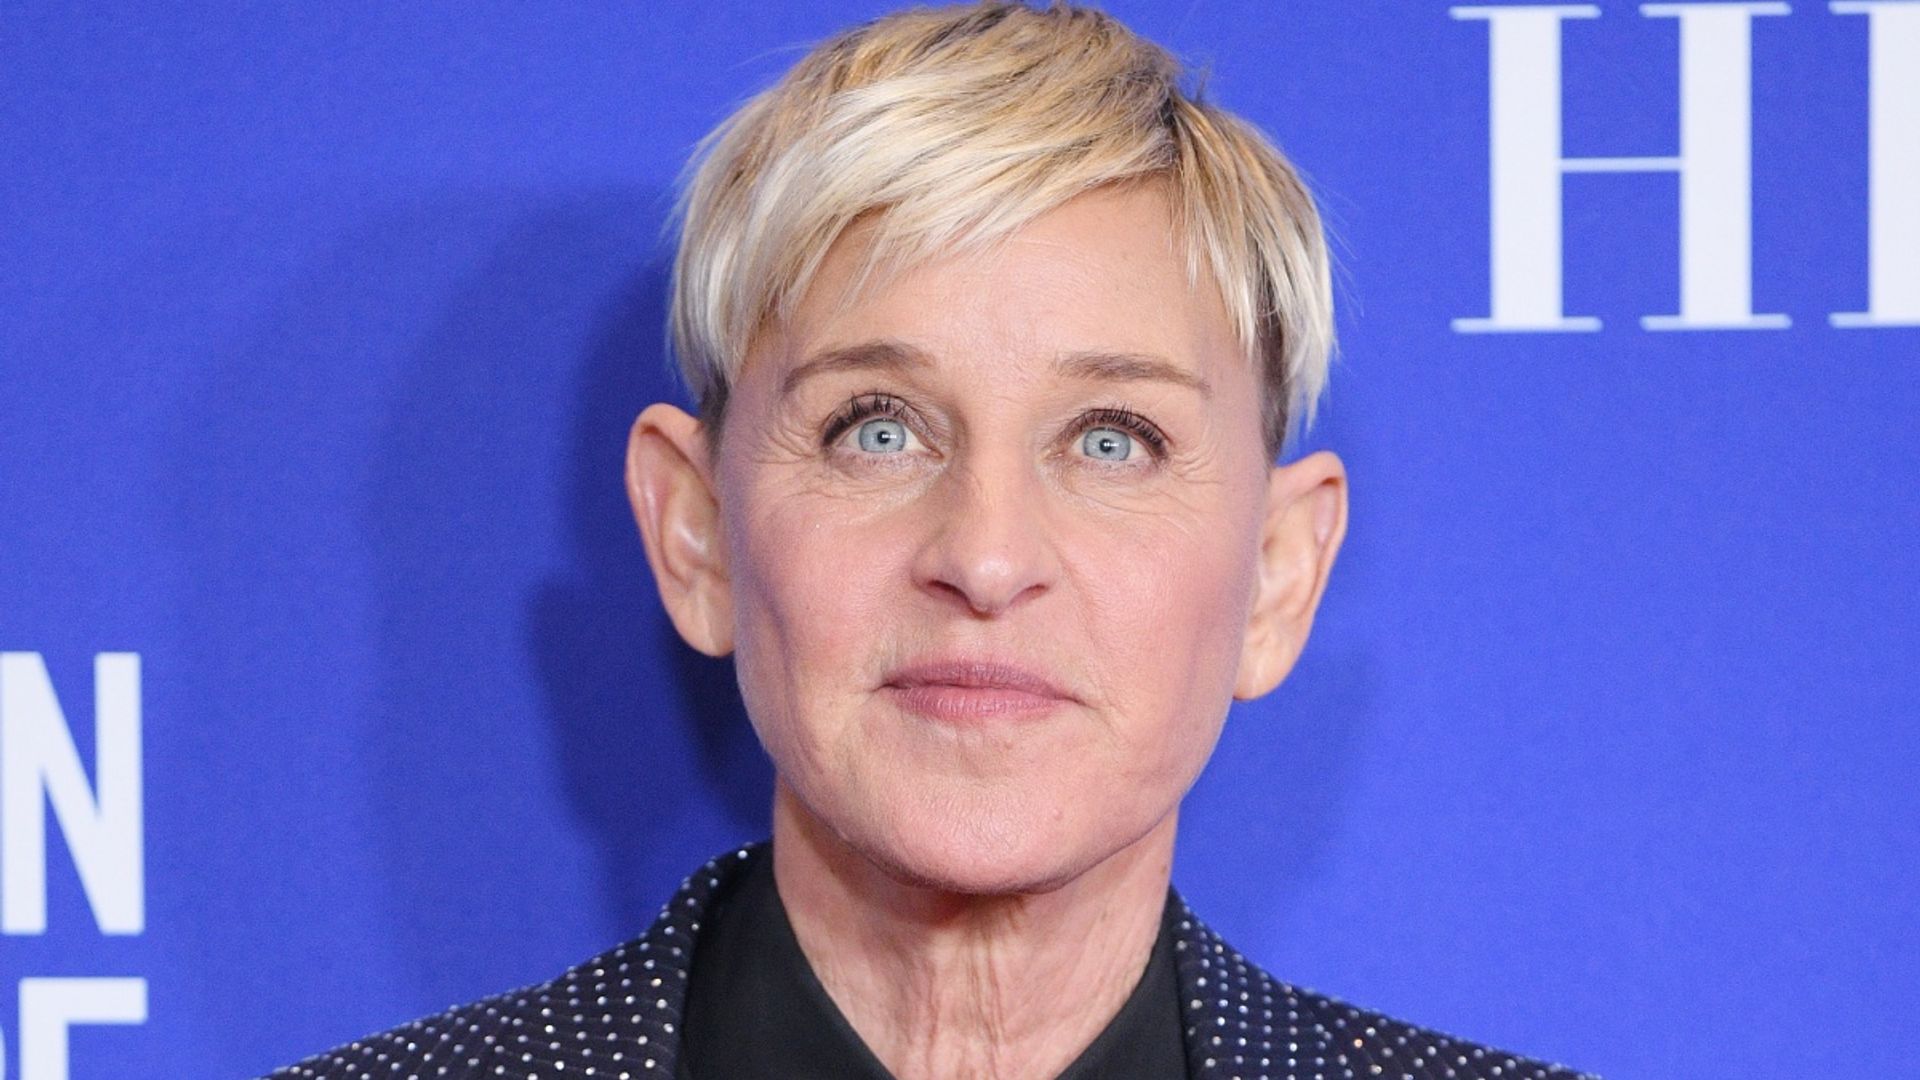 Ellen DeGeneres in tears during emotional final show - watch